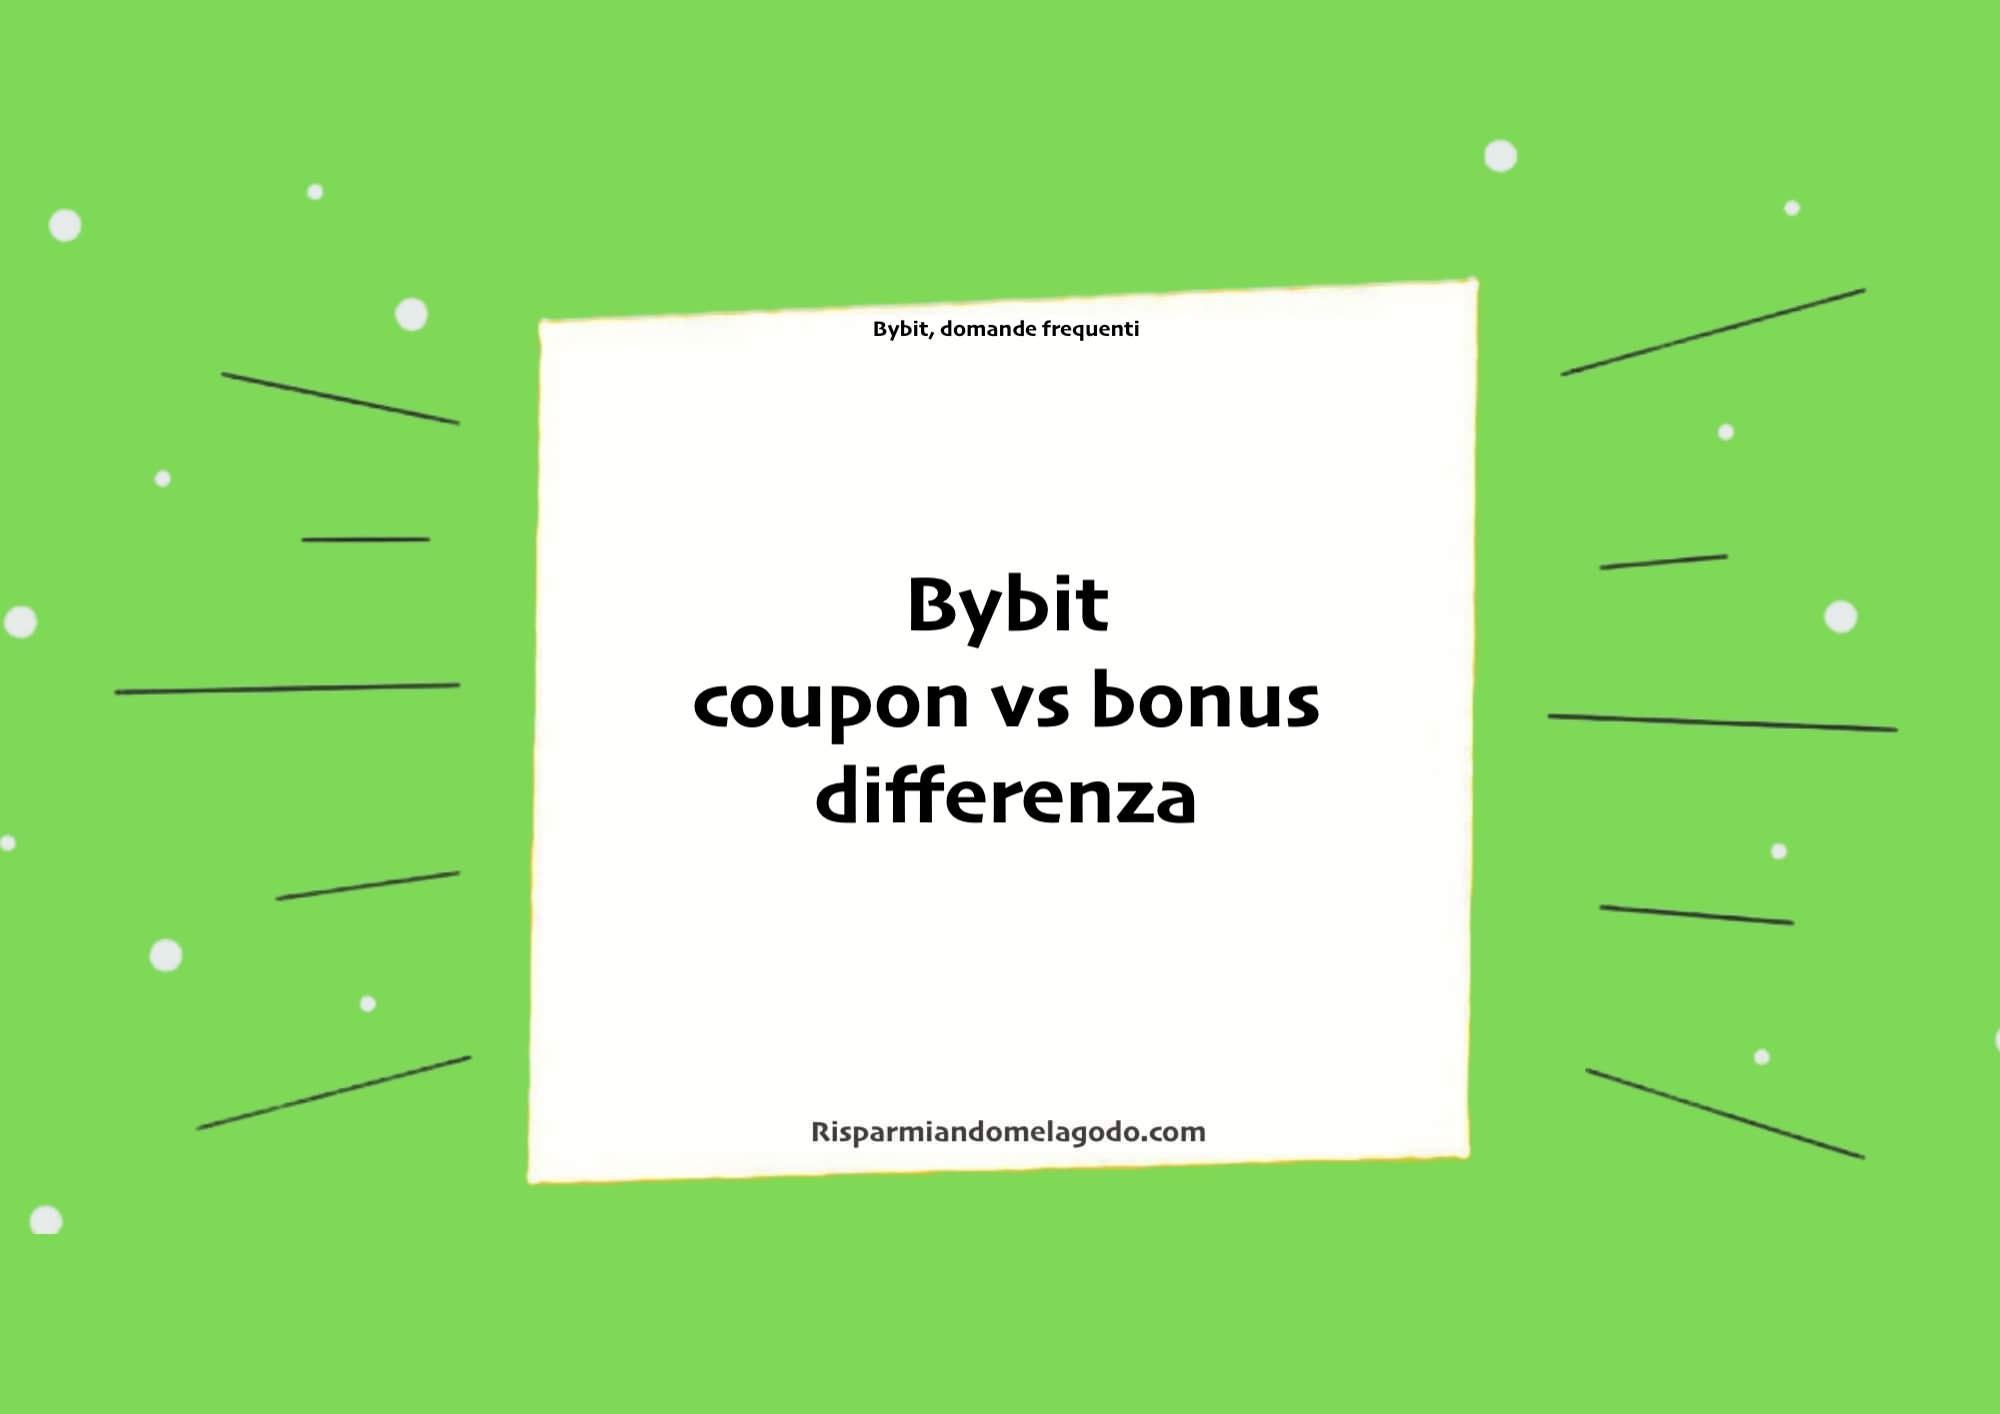 Bybit coupon vs bonus differenza